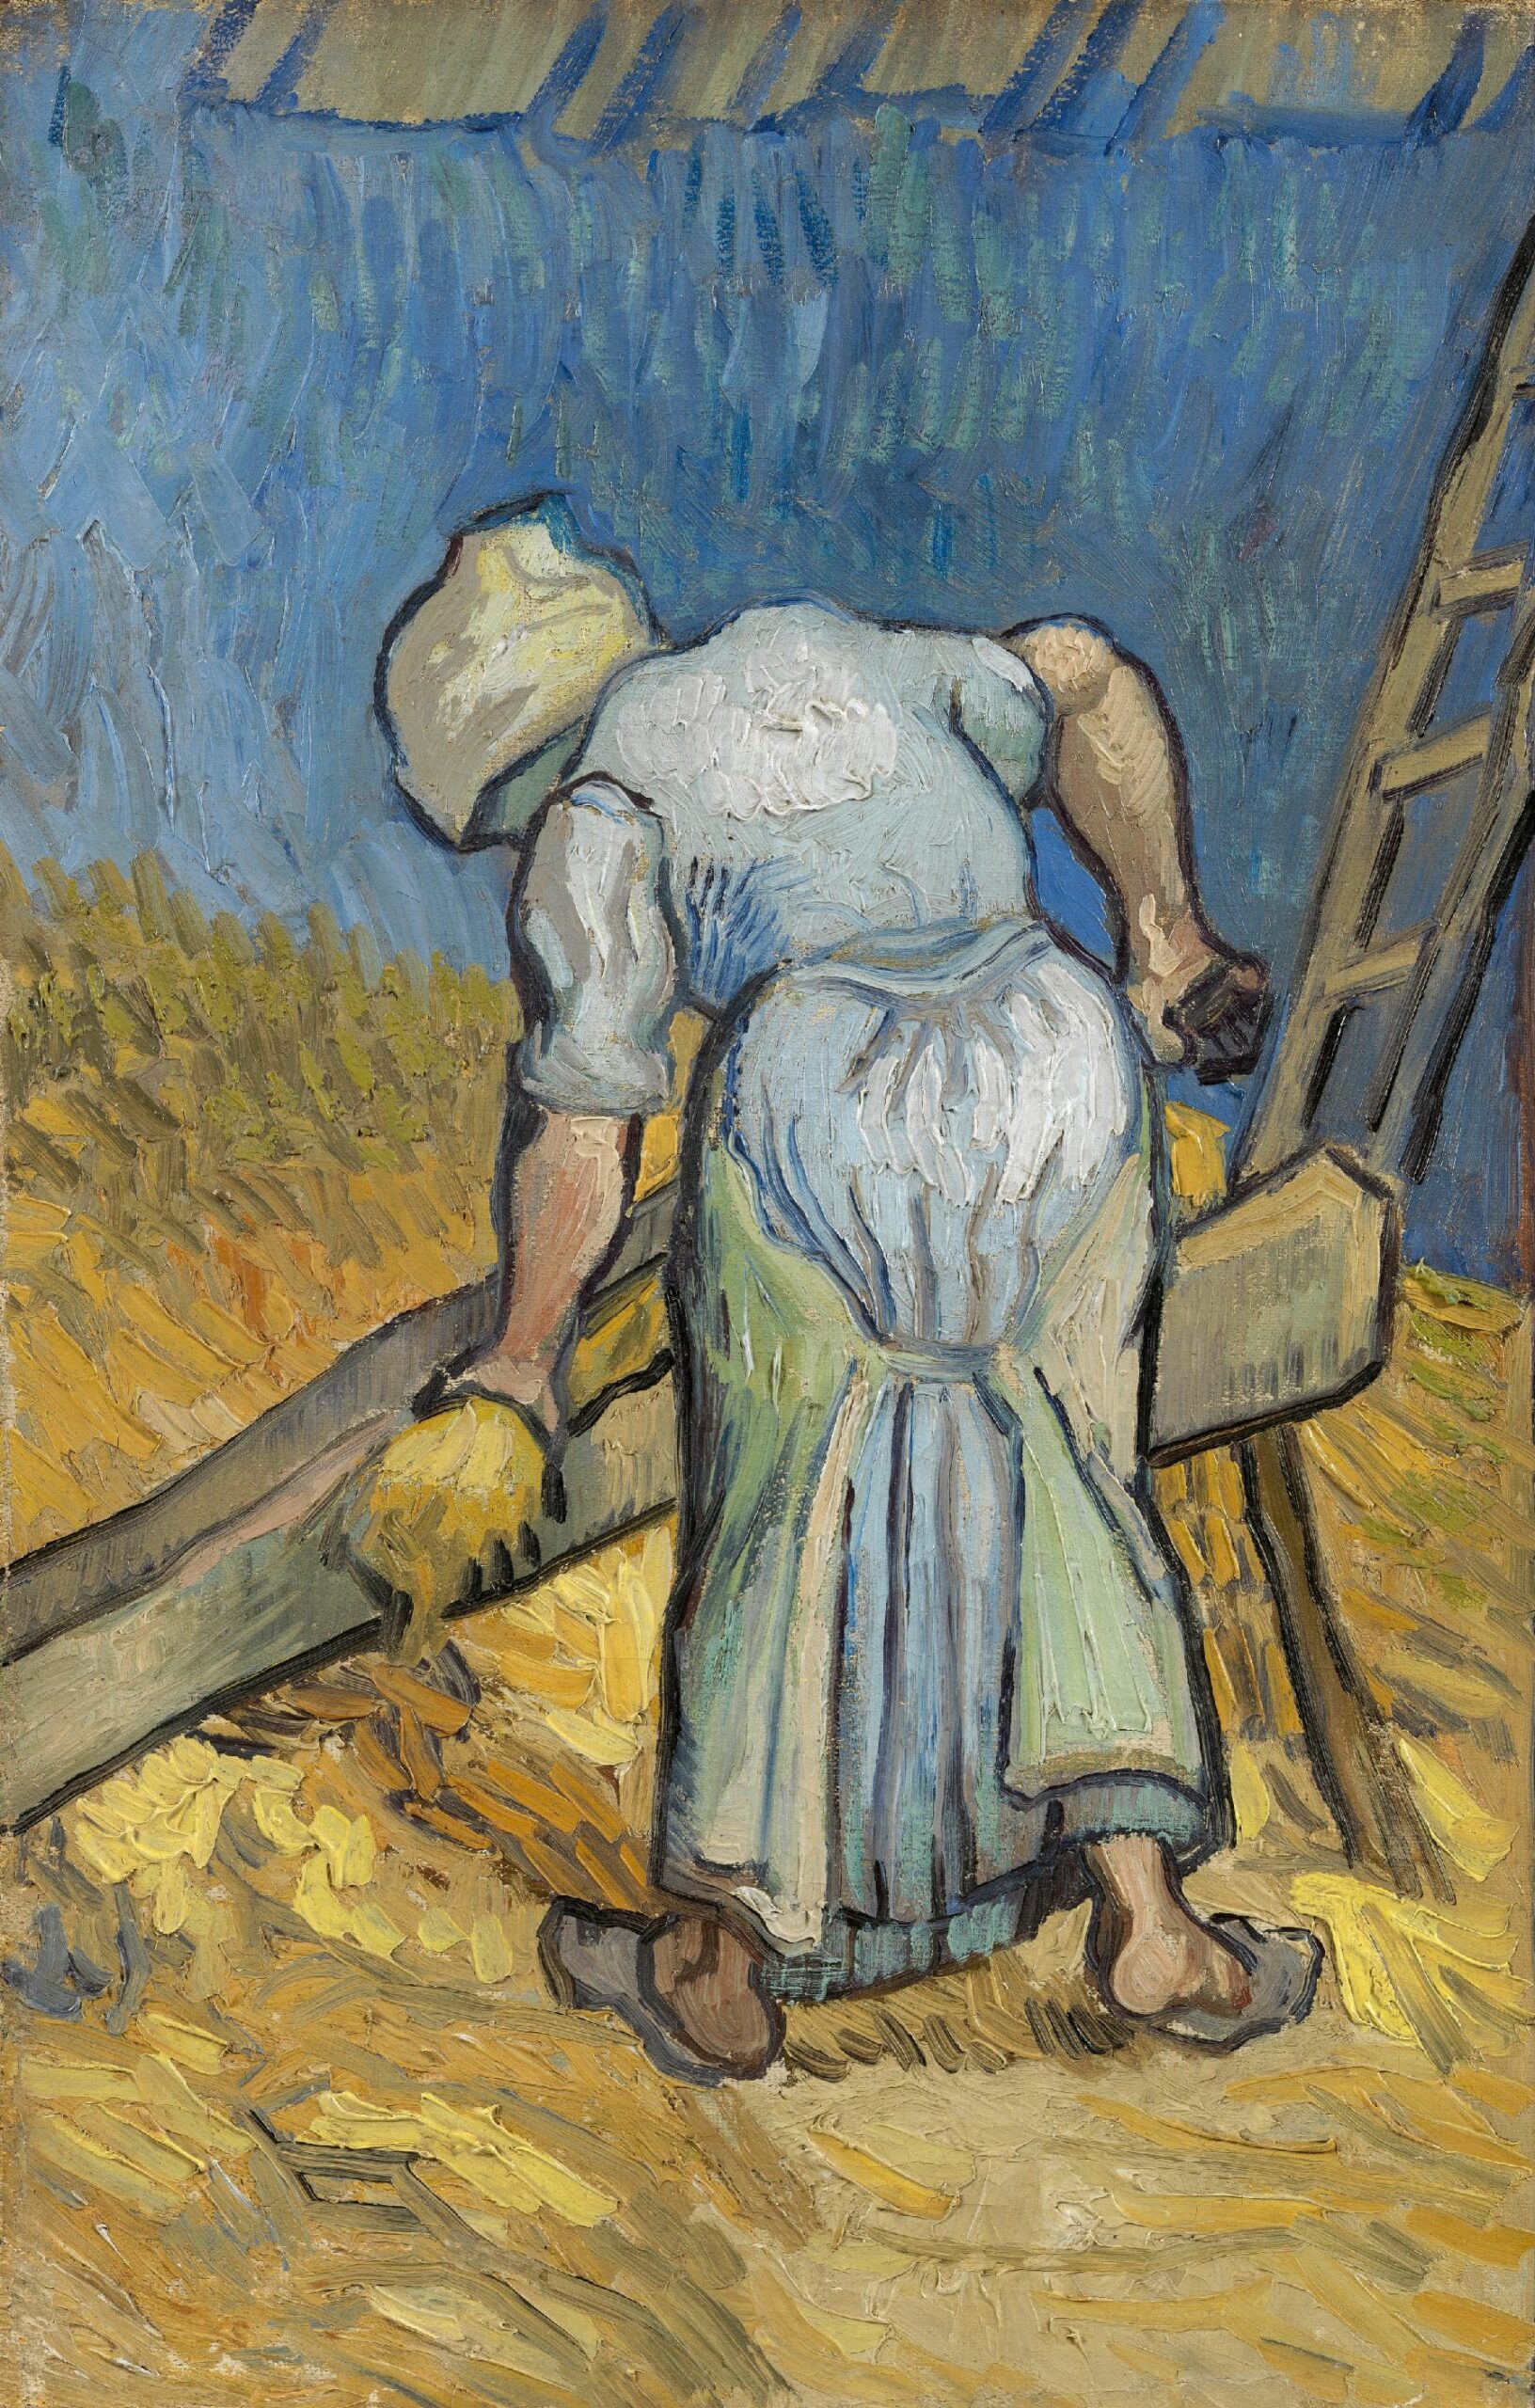 De boerin die vlas kneust (naar Millet) Vincent van Gogh (1853 - 1890), Saint-Rémy-de-Provence, september 1889